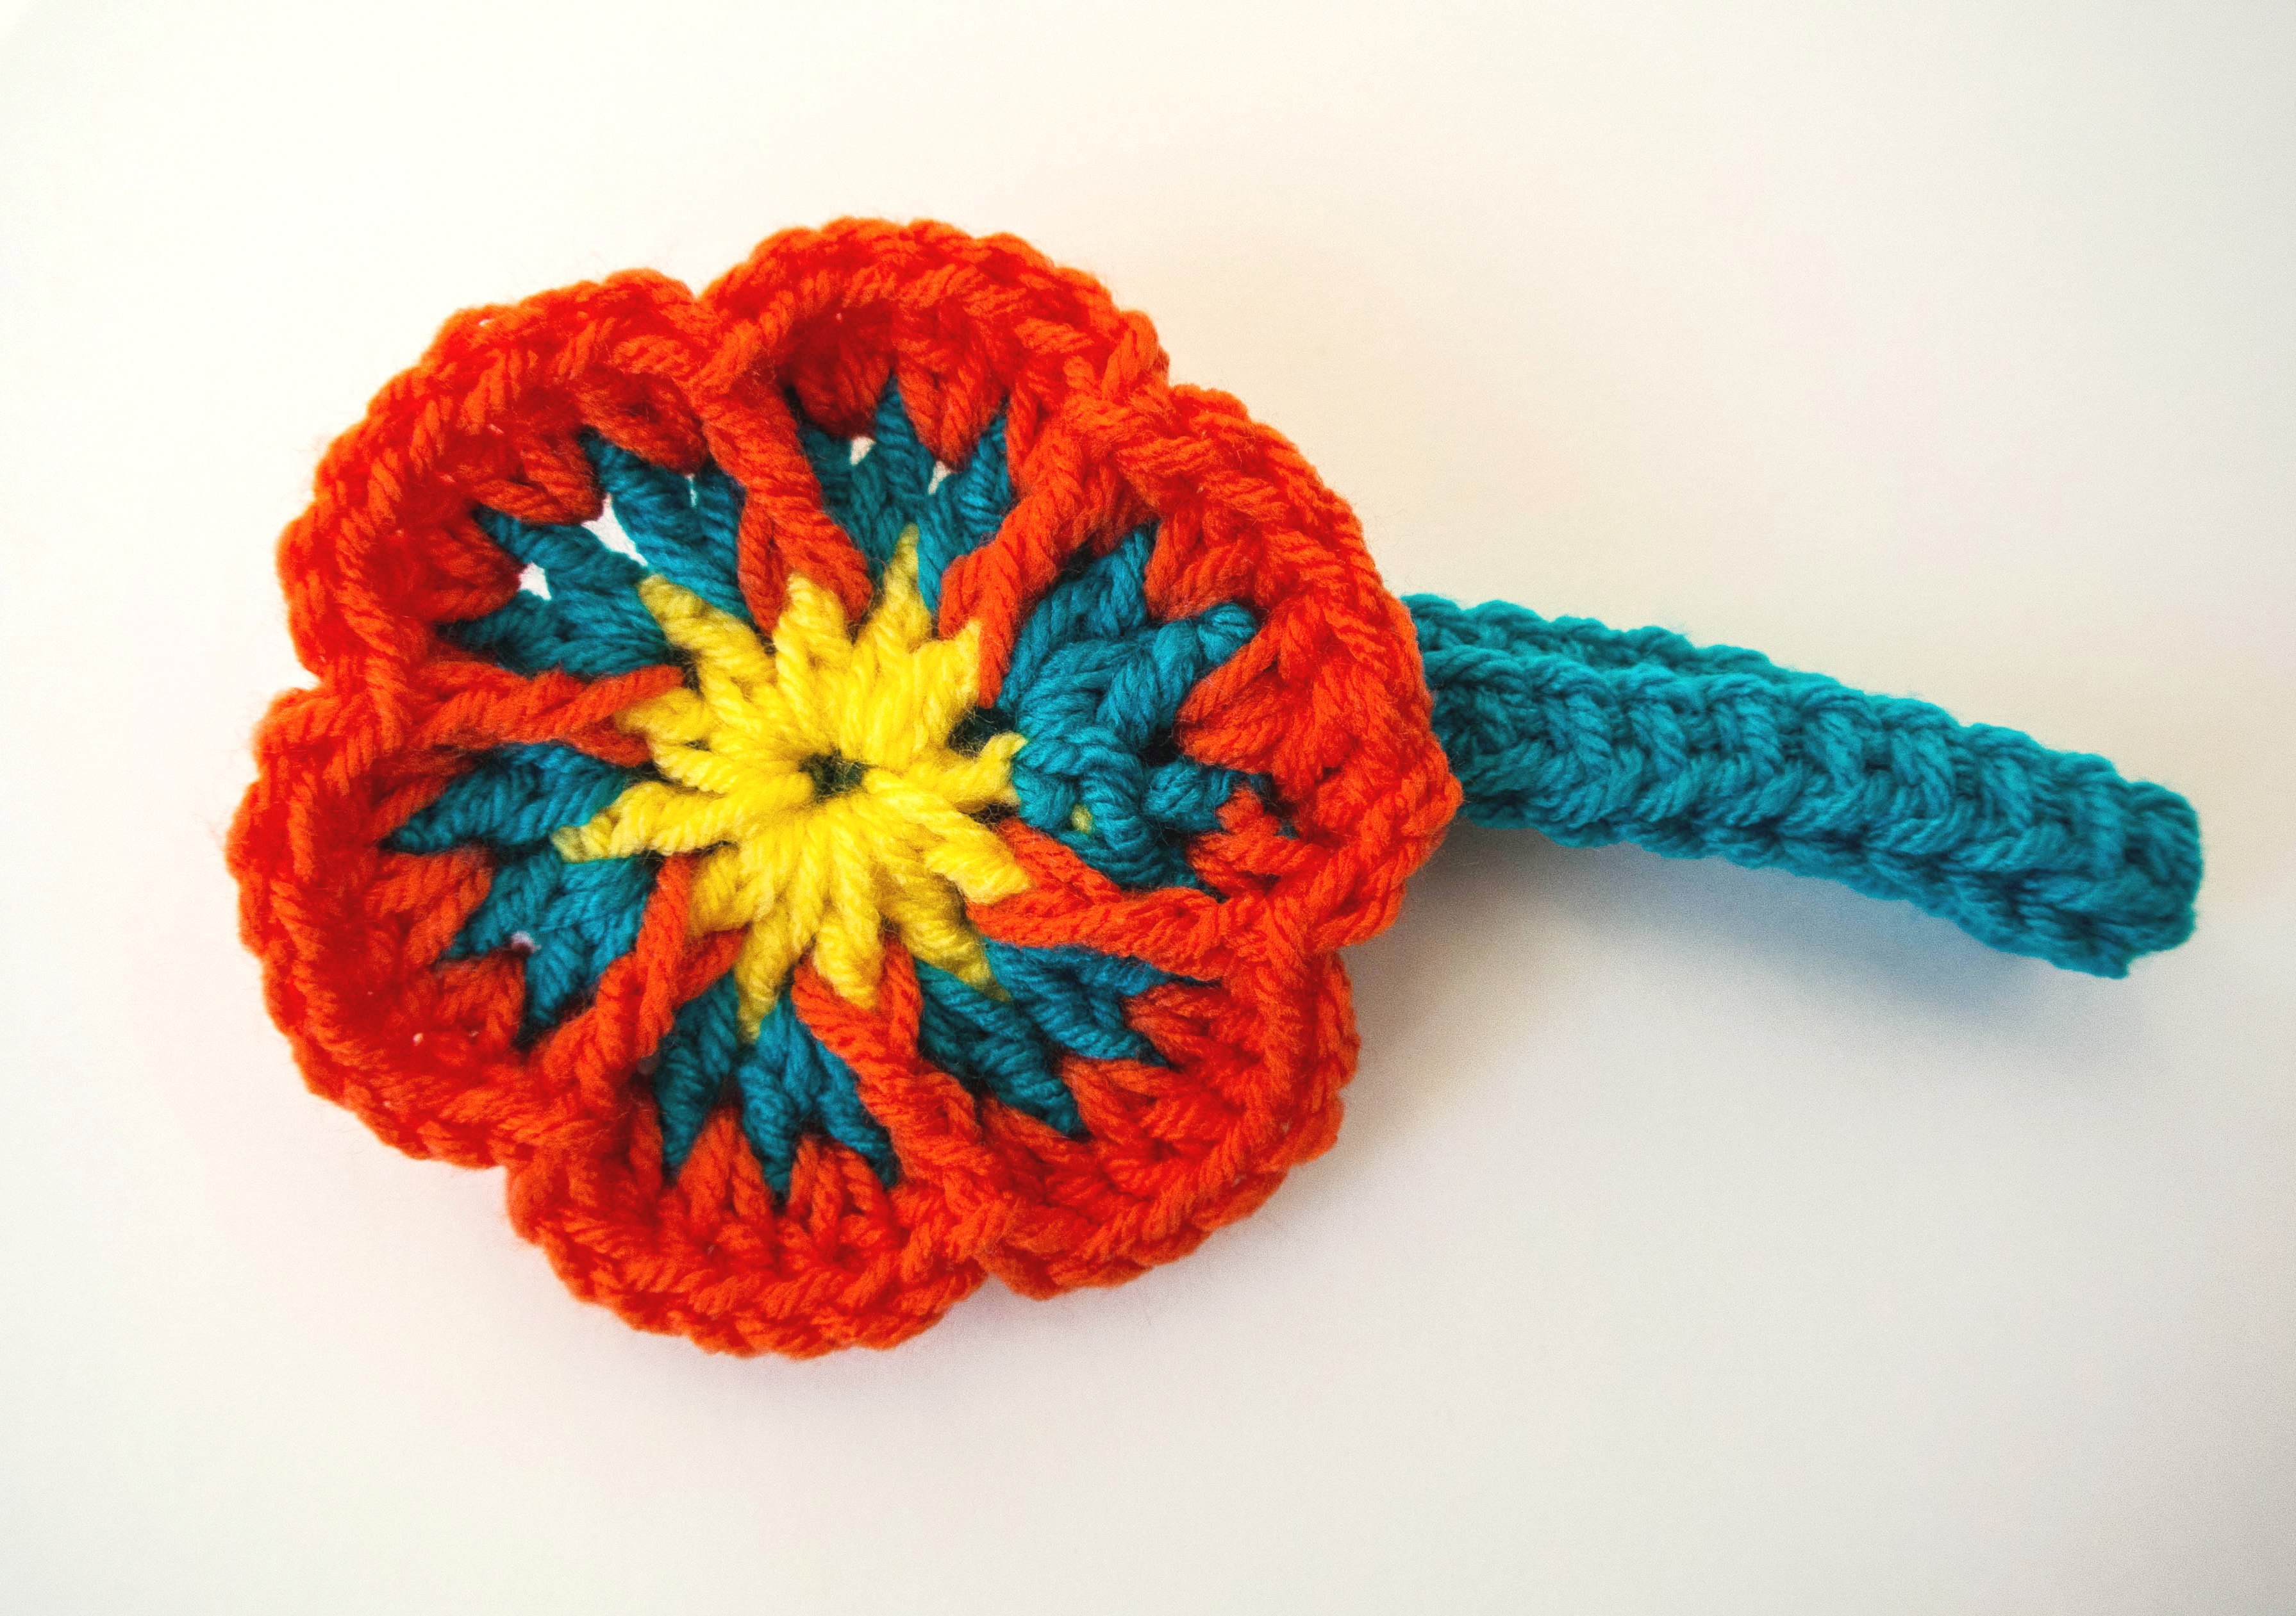 Easy Pretty And Free Crochet Flower Pattern With Bonus Headband Simply Collectible Crochet,Marscapone Benjamin Moore Mascarpone